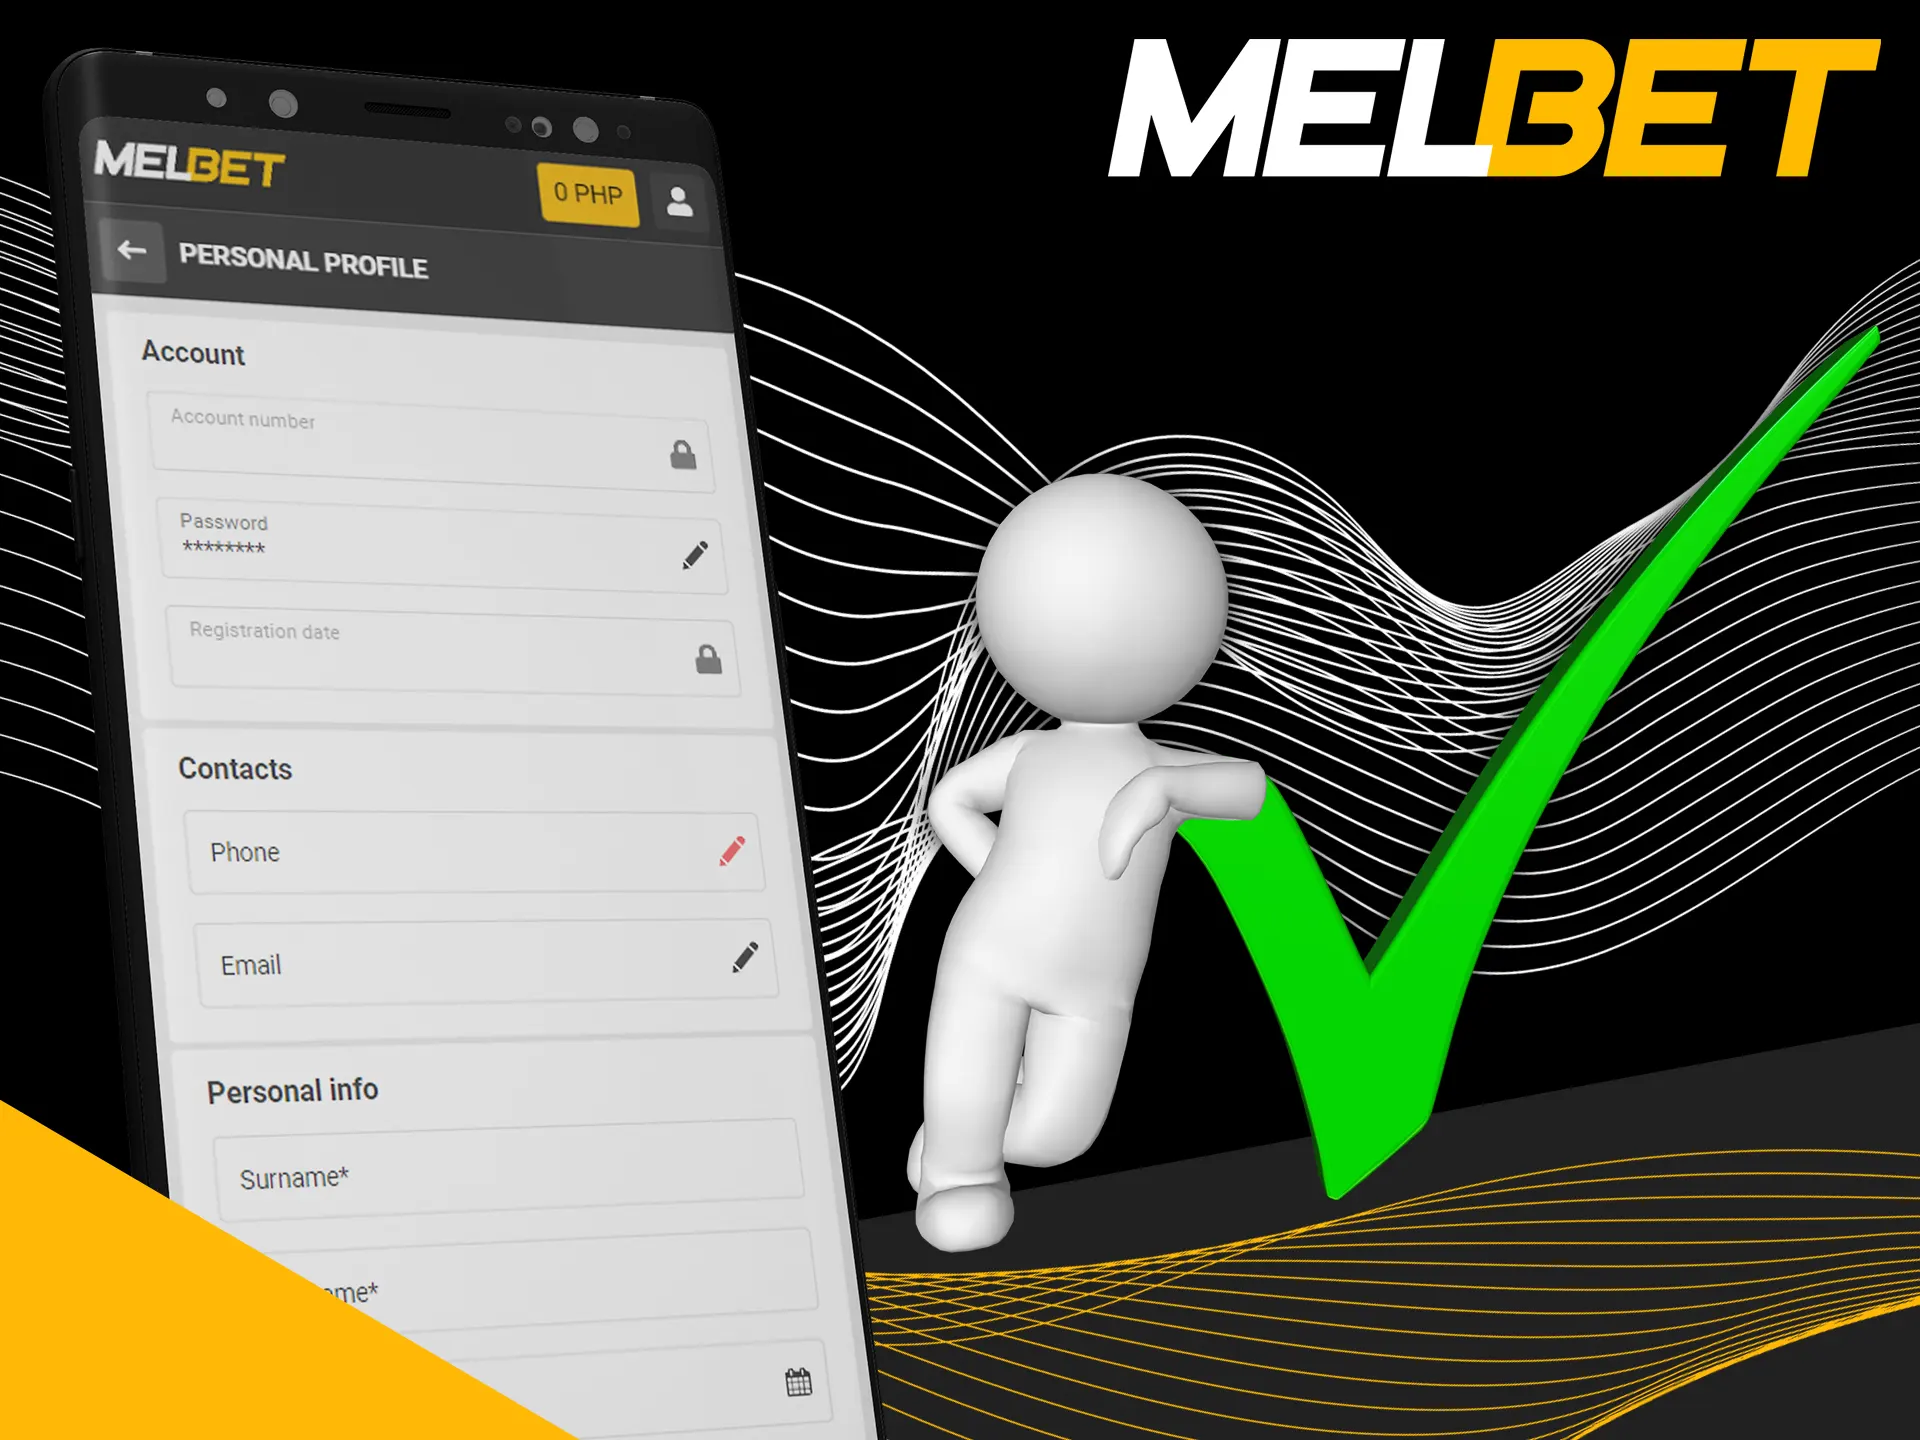 Verify your Melbet account by providing data.